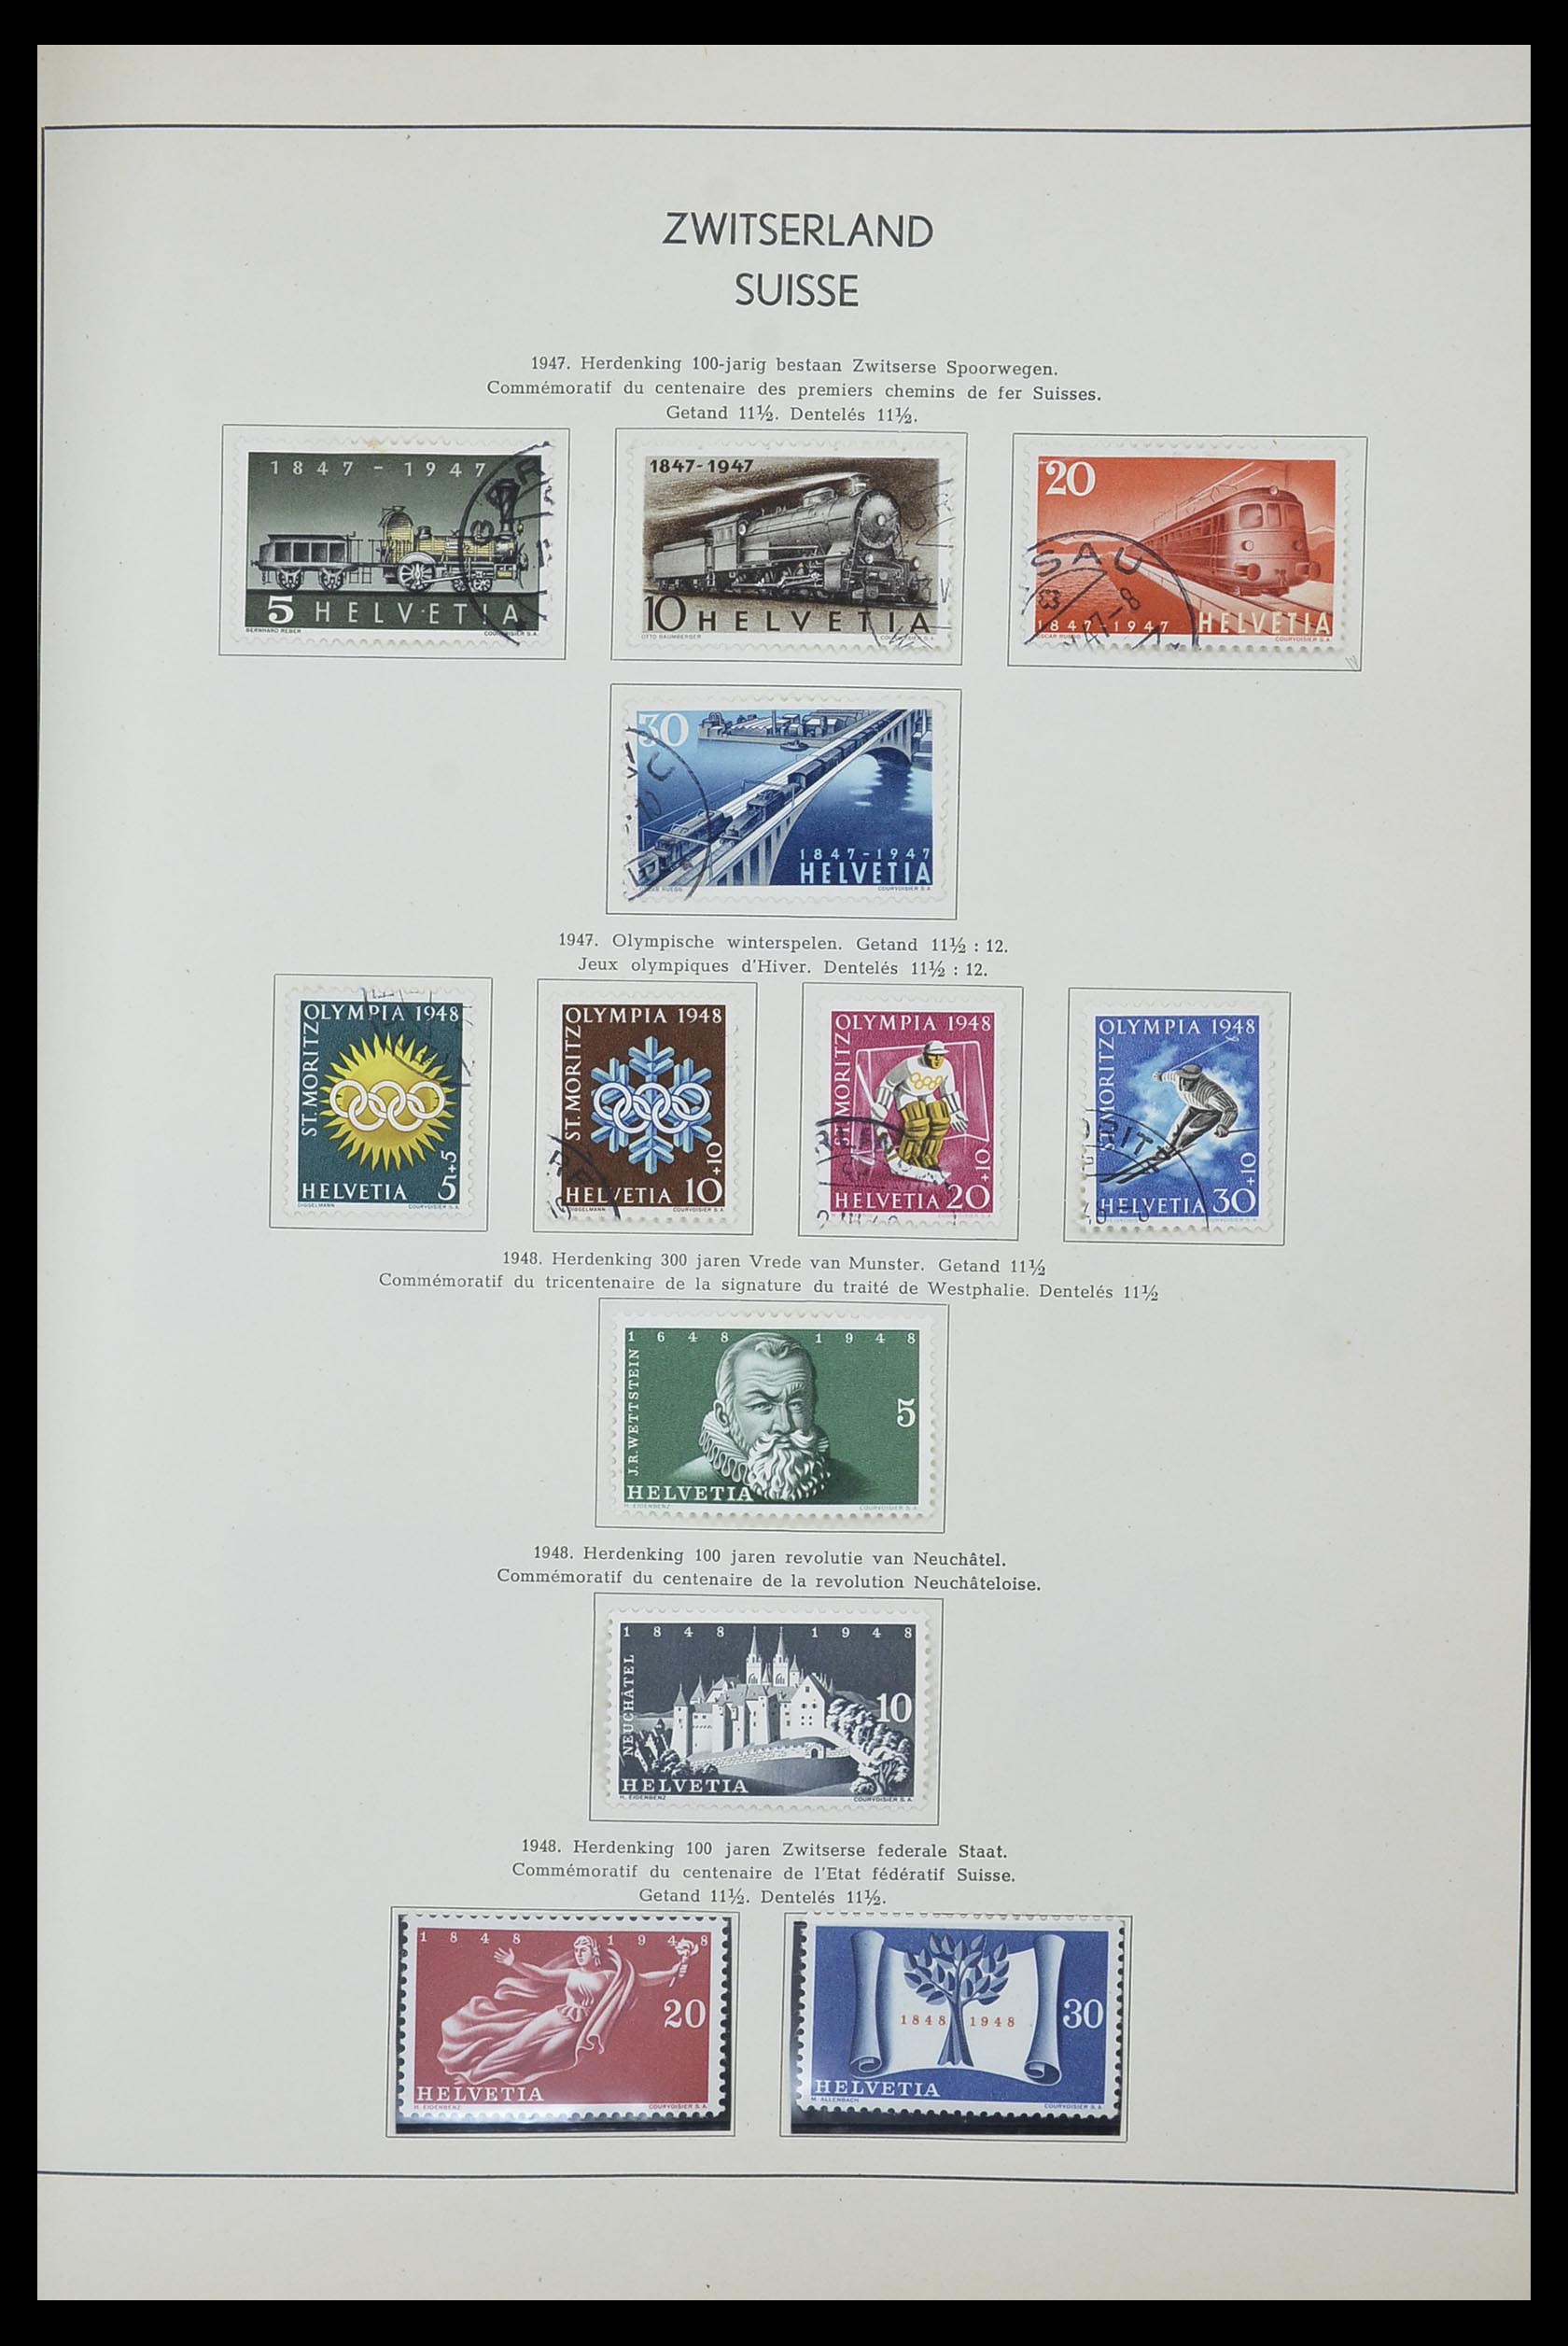 33601 024 - Stamp collection 33601 Switzerland 1854-1985.